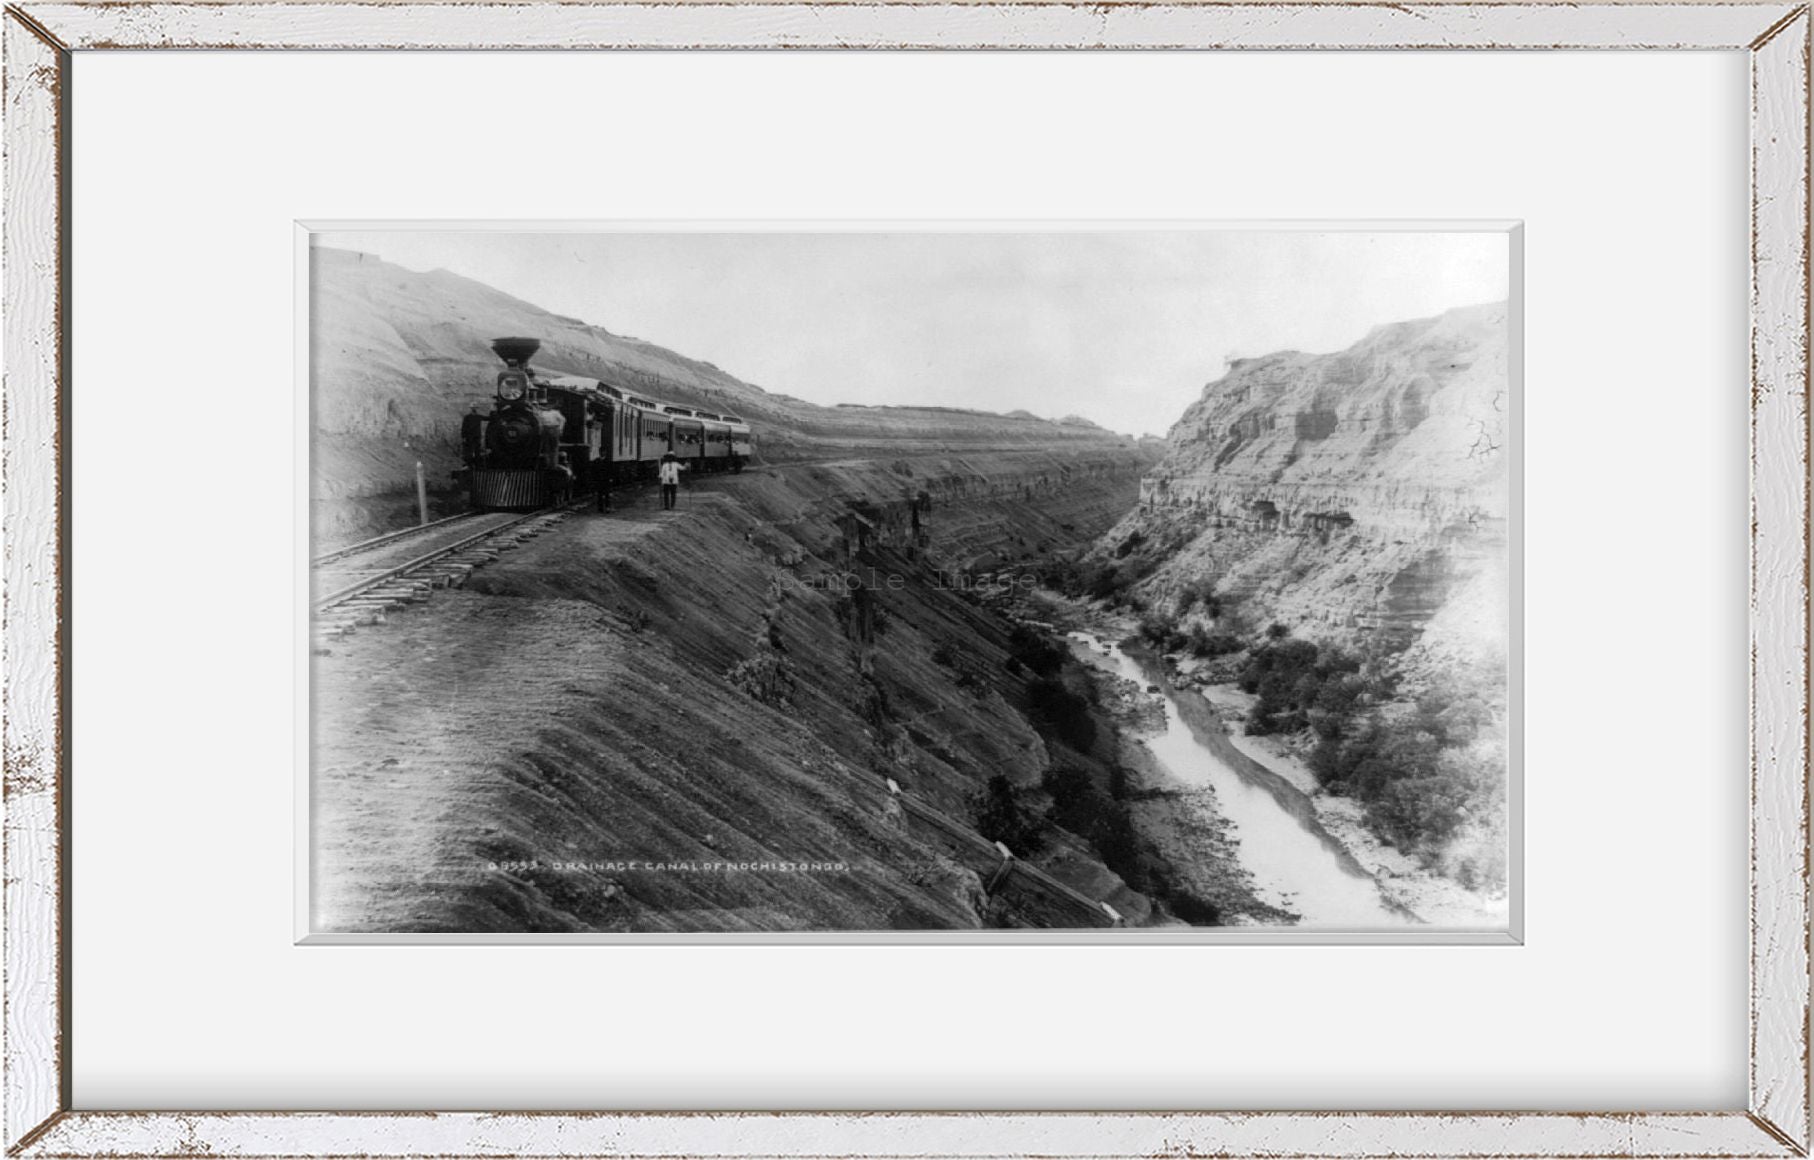 ca. 1885 photograph of Railroad trains in Mexico